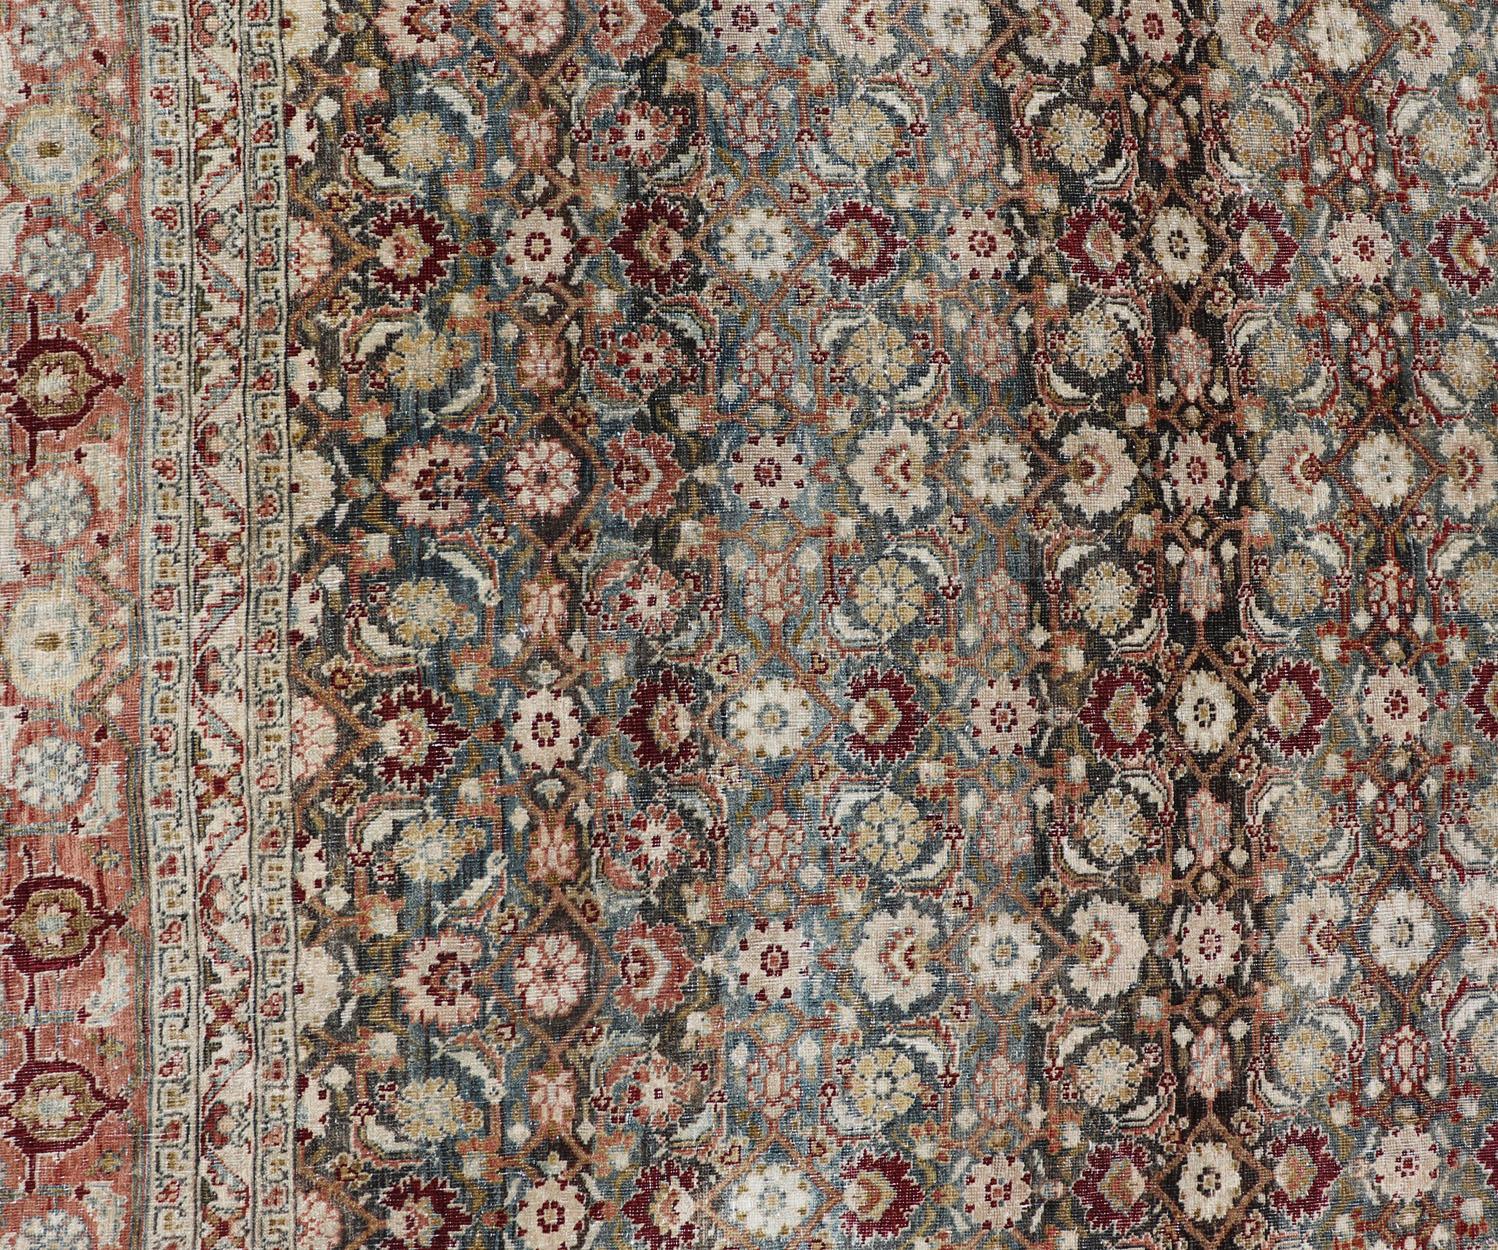 Tapis ancien Bidjar de Perse avec un design floral Herati, Keivan Woven Arts/rug /TU-KAH-100, pays d'origine / type : Iran / CIRCA, circa 1900.

Mesures : 7' 7